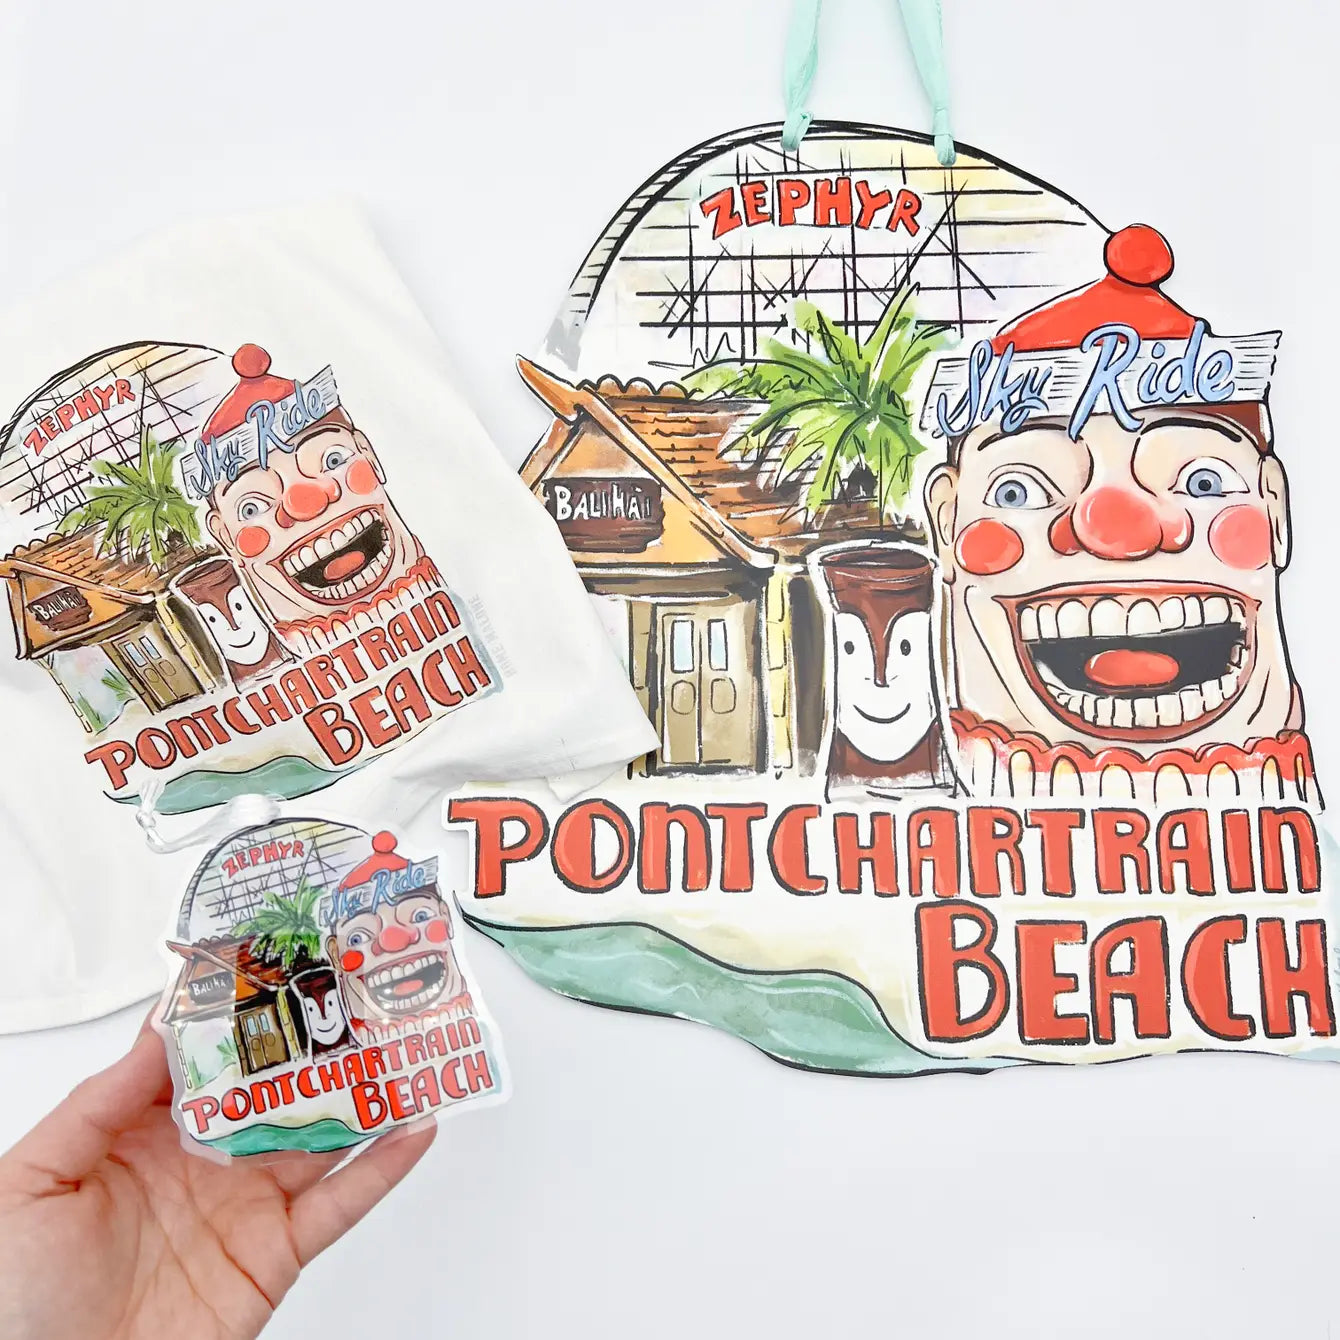 Pontchartrain Beach Acrylic Ornament